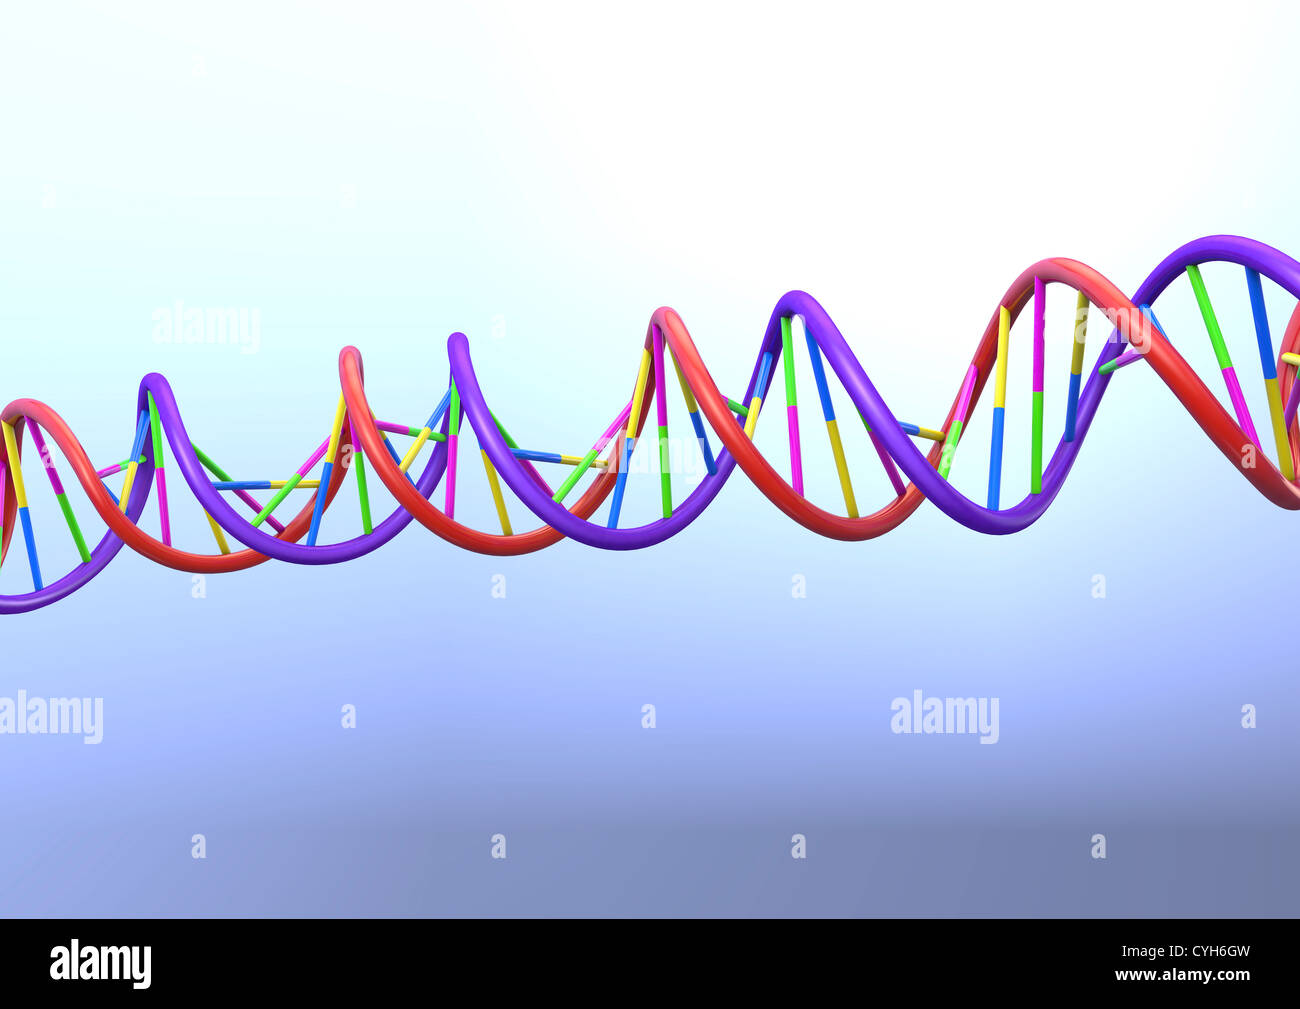 DNA Double Helix Model  - 3D render - Concept image Stock Photo